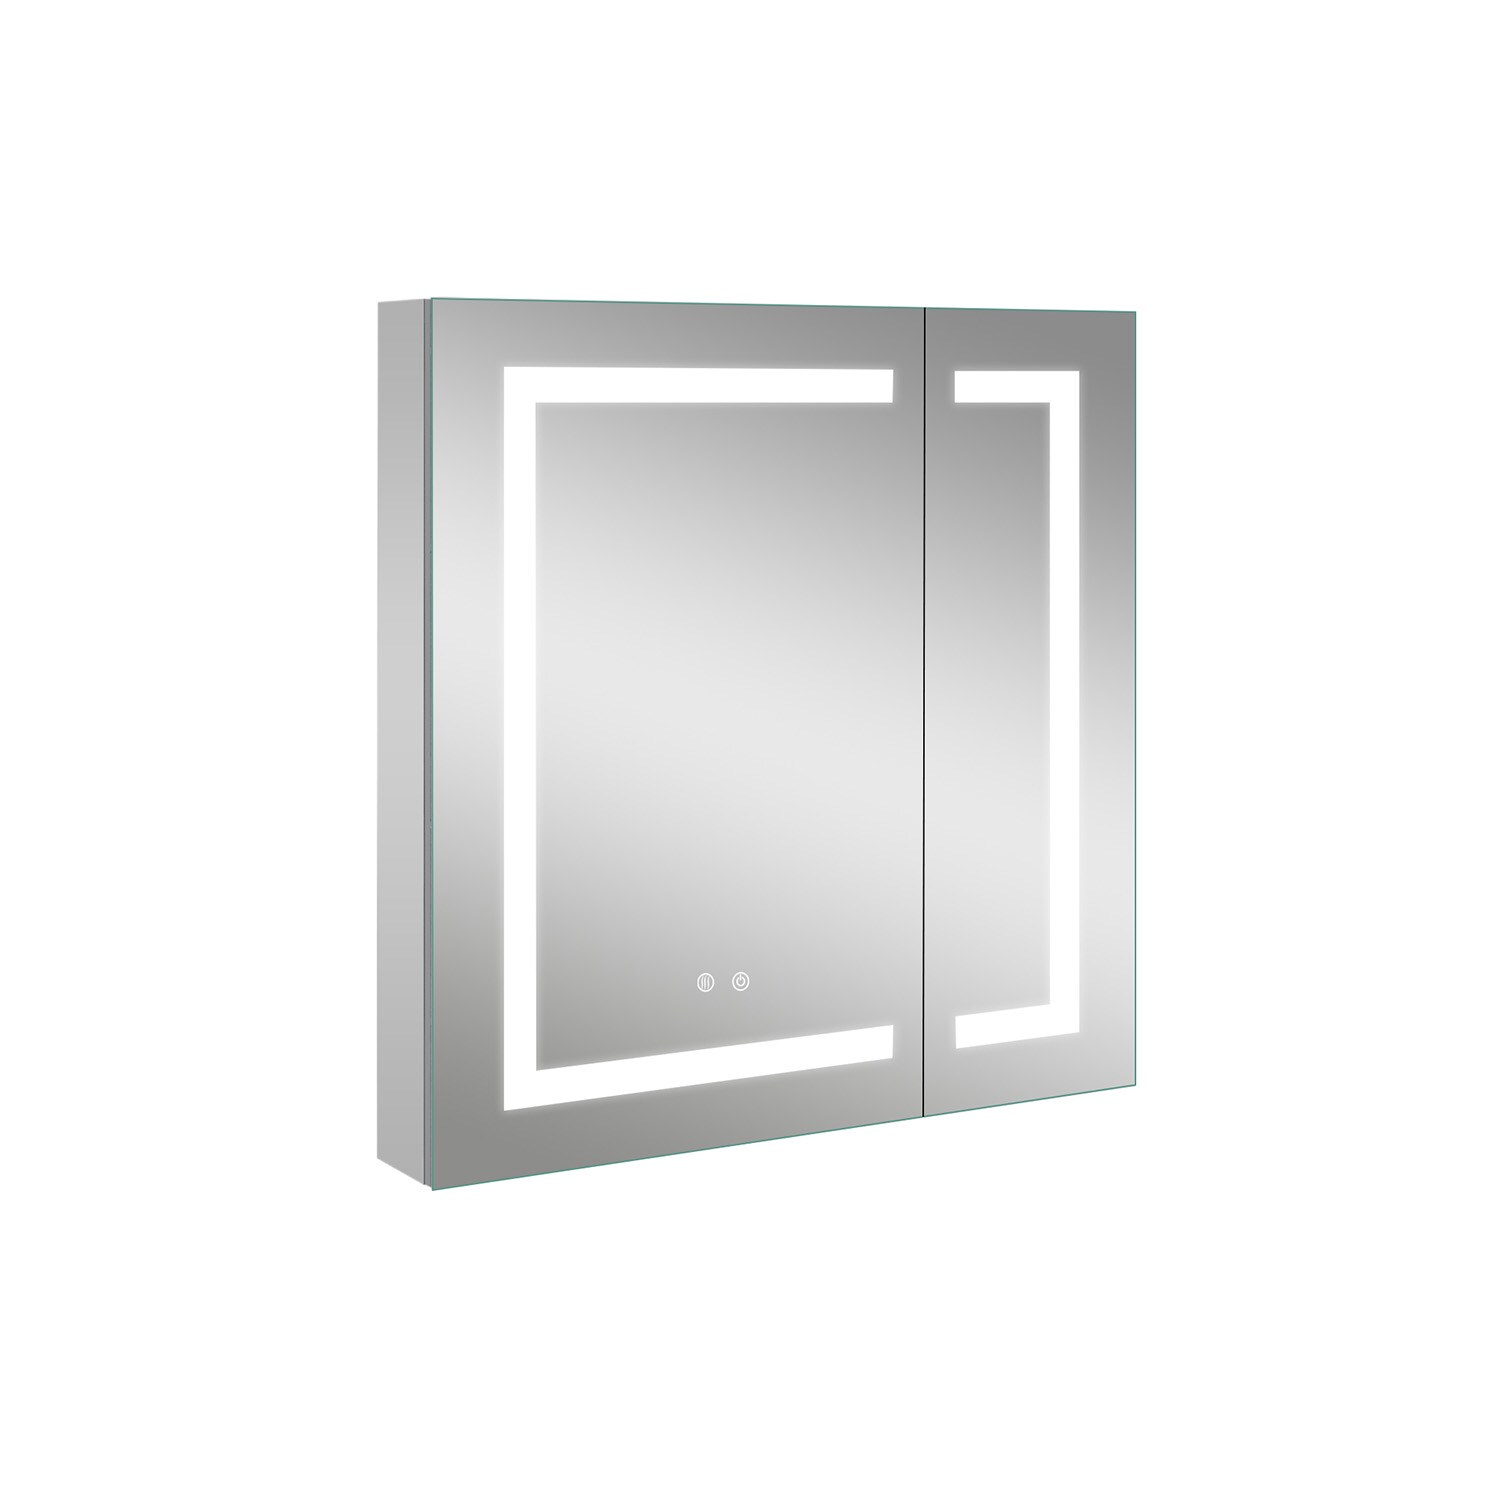 Janboe Led Cabinet Aluminum Storage Makeup Cabinet with Adjustable Glass Shelves,Fog-free 50 x 70 cm 